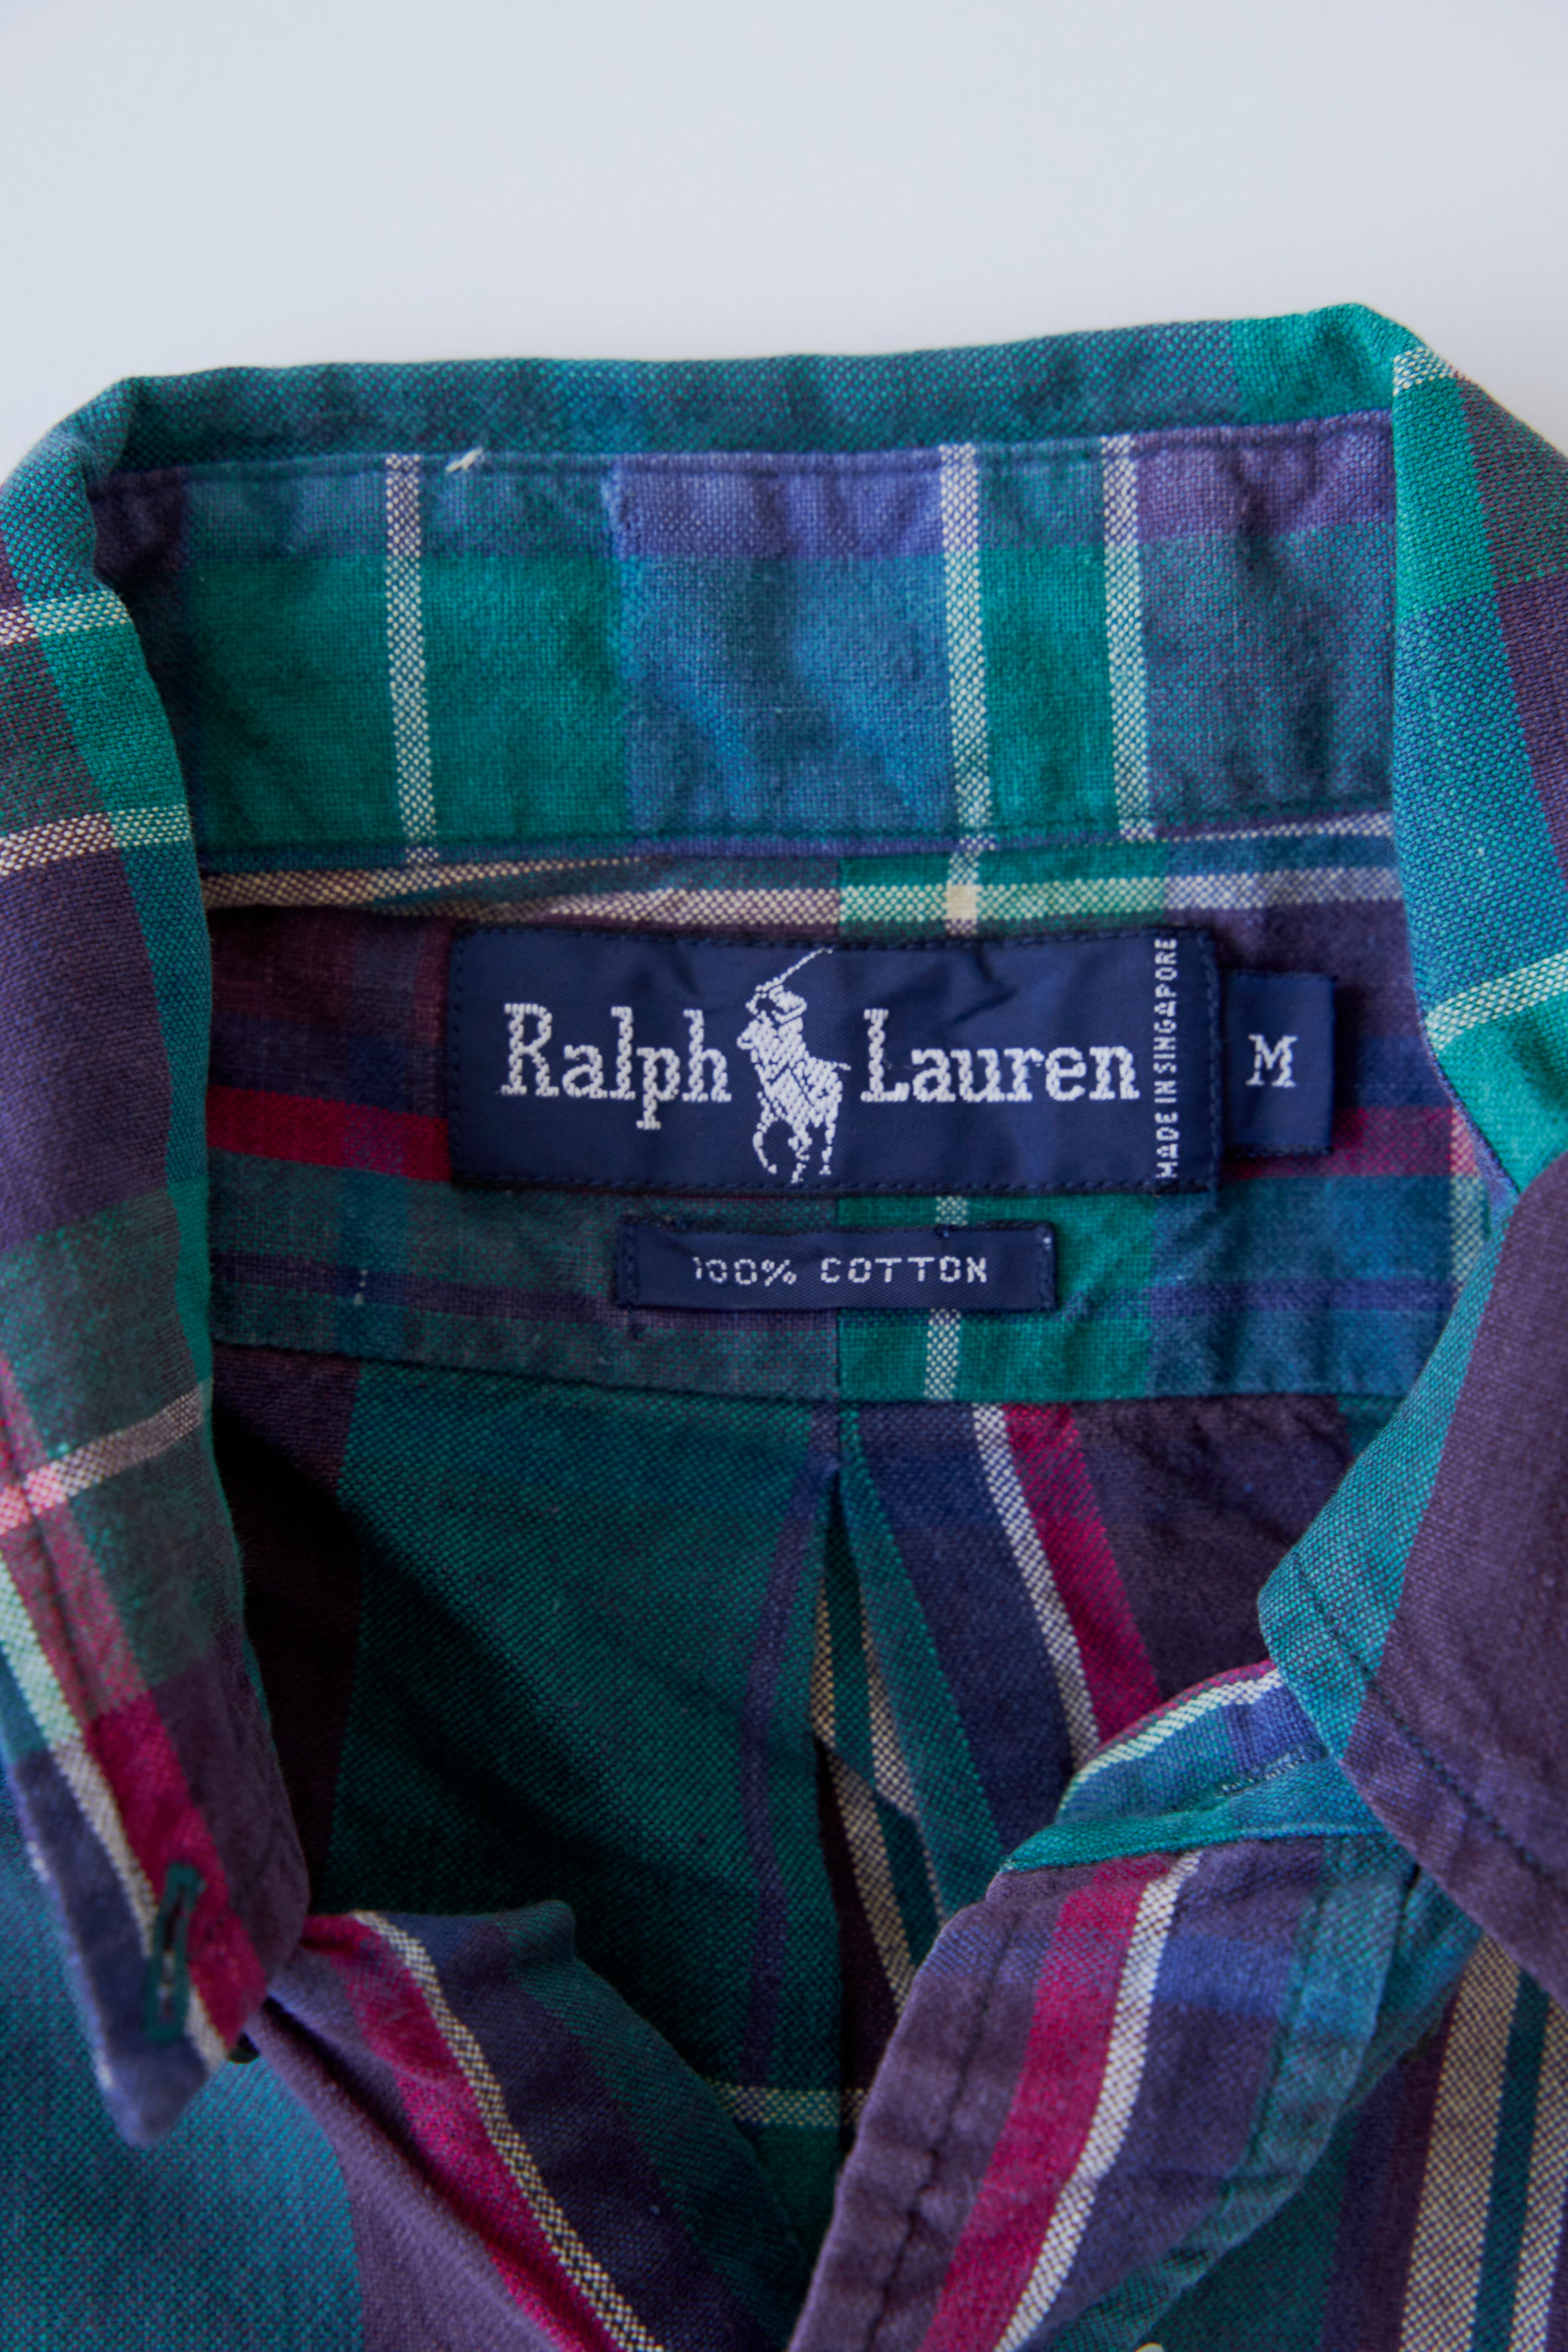 Vintage /  Ralph Lauren shirts